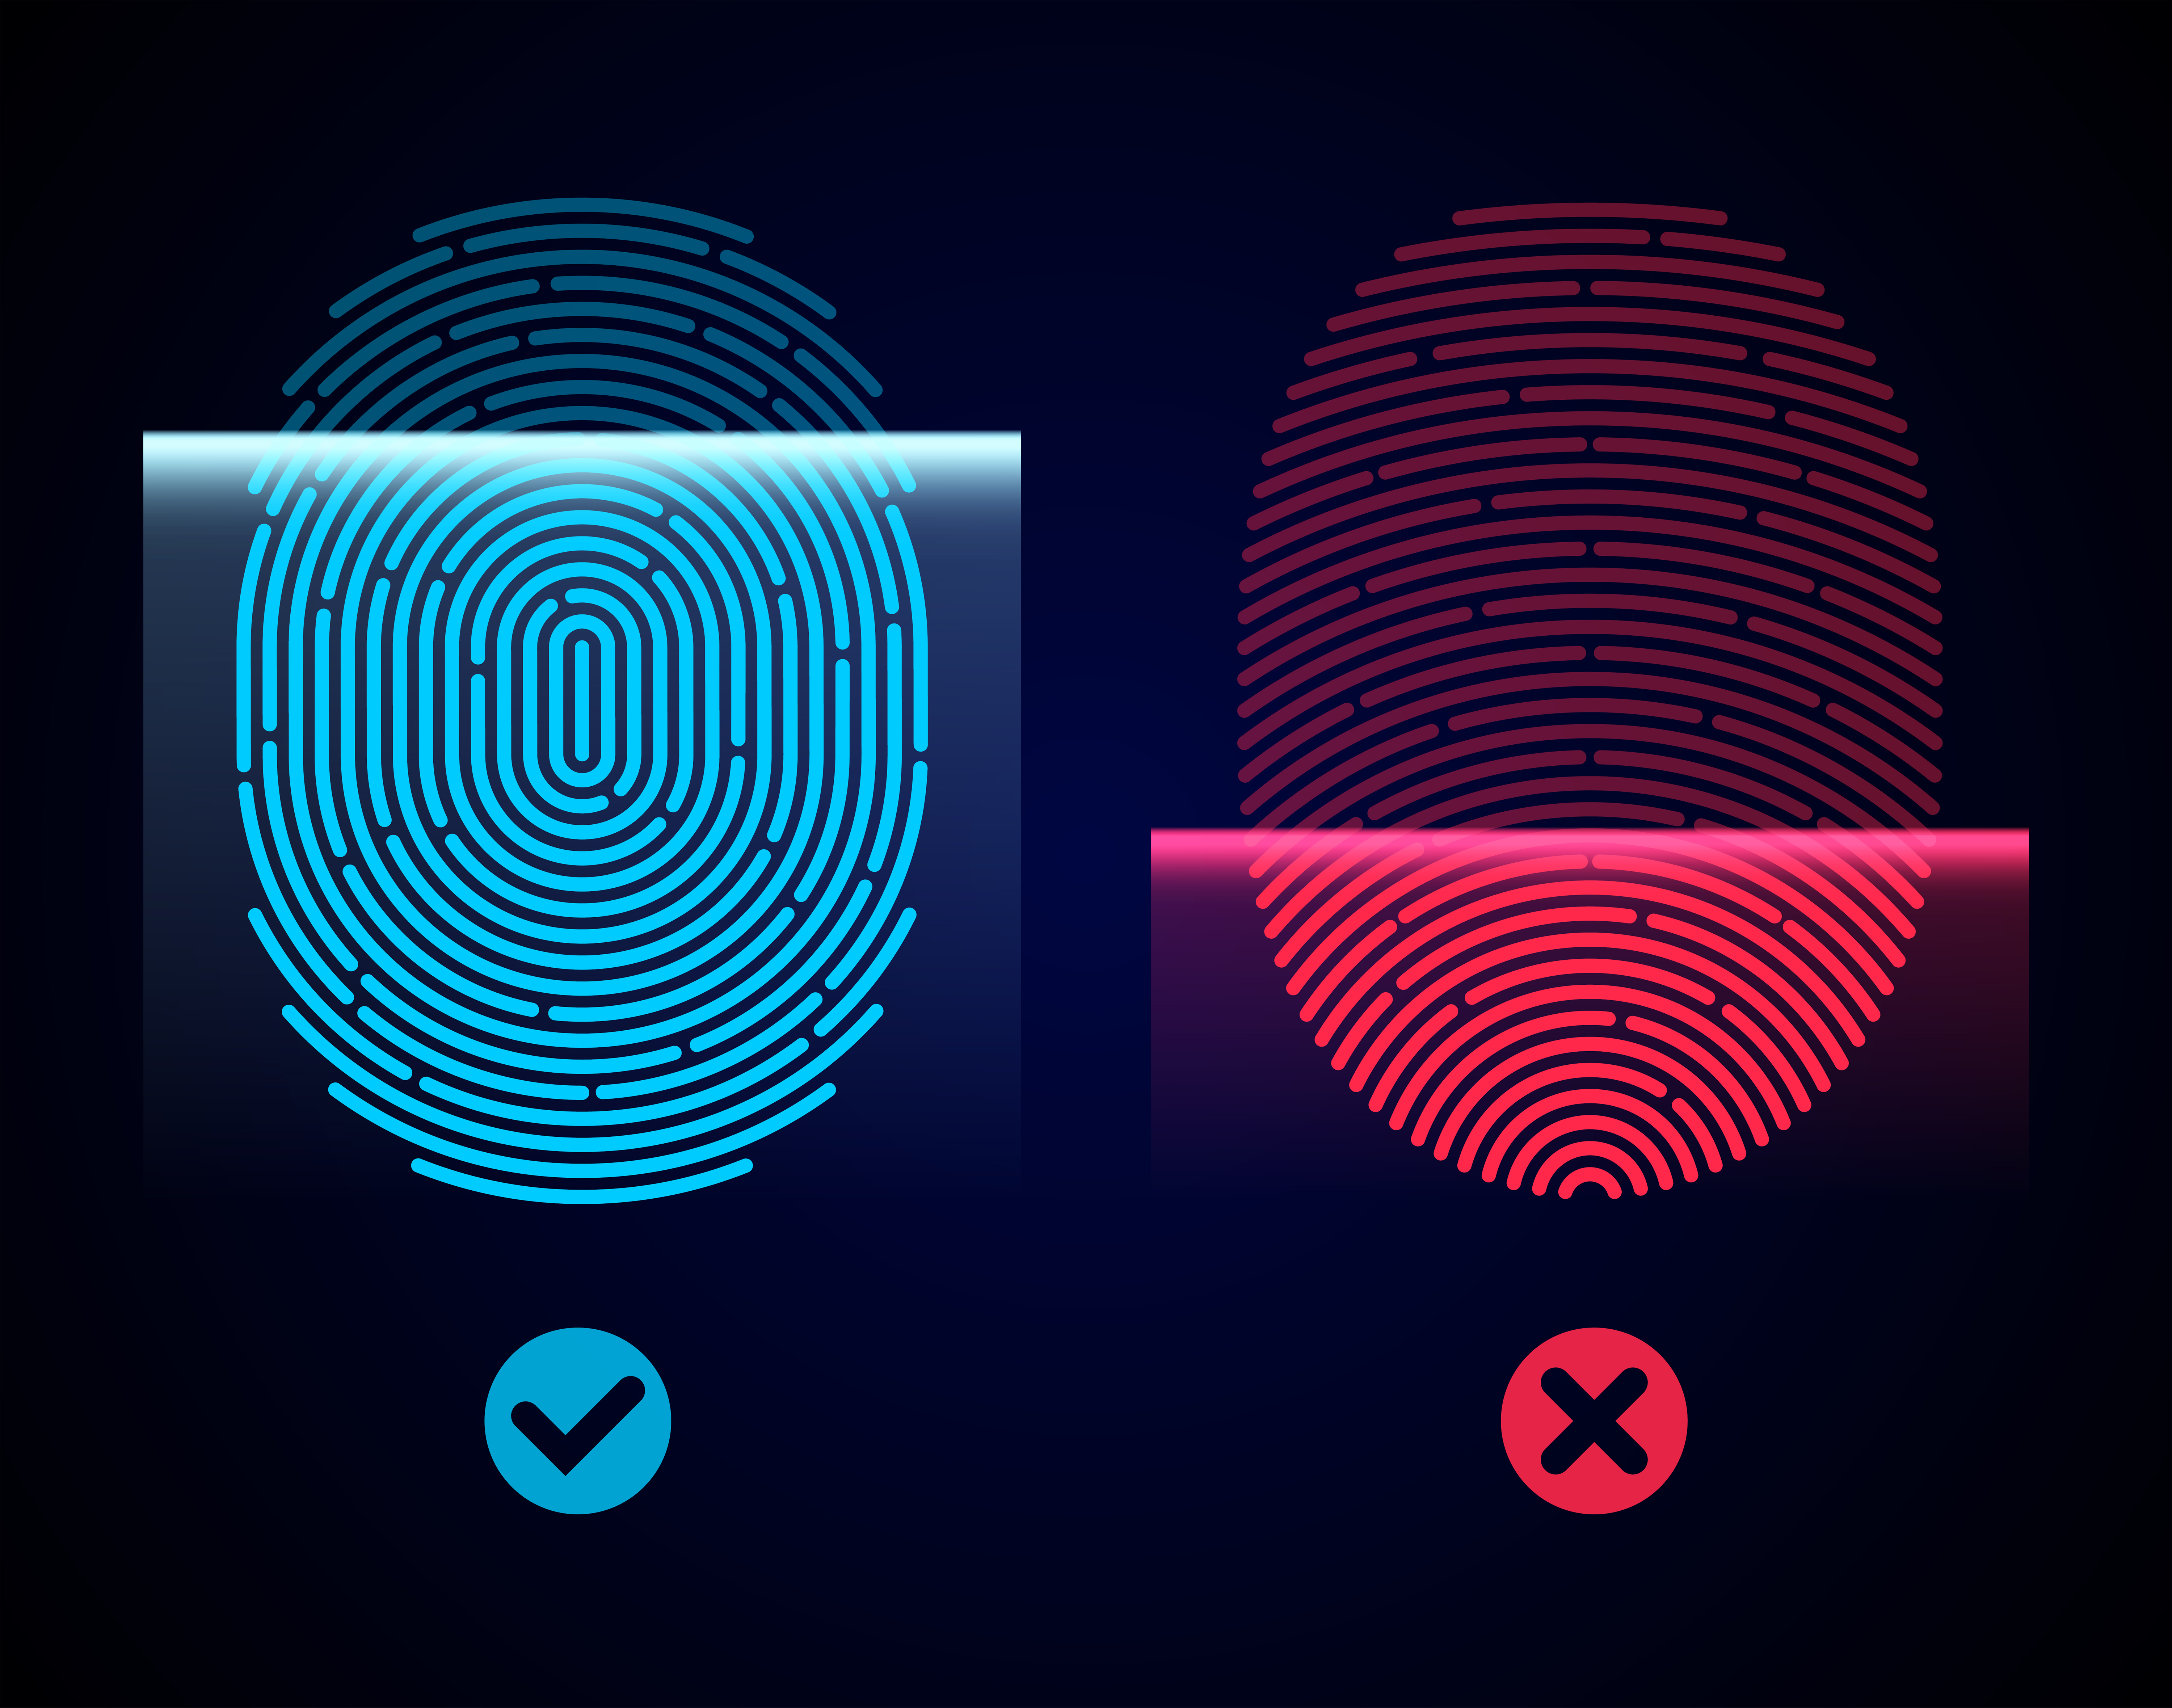 biometric fingerprint authentication in a wearable